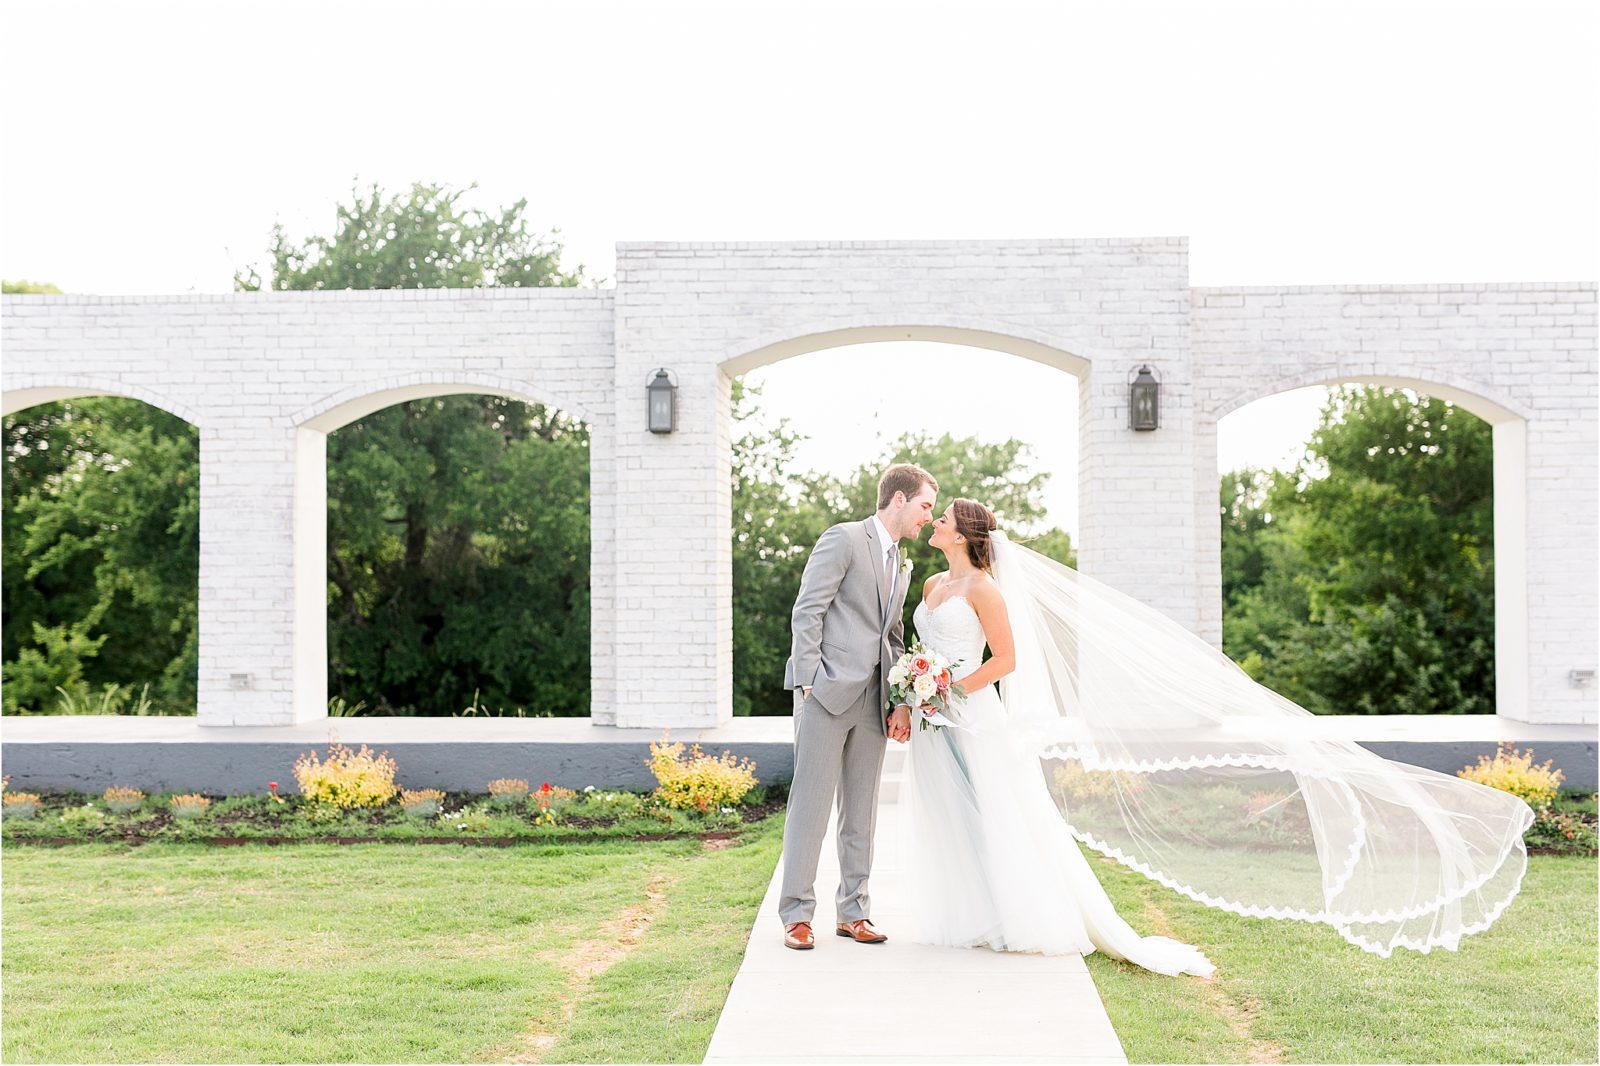 Dallas Wedding Photography at The Grand Ivory in Leonard, Texas by DFW Wedding Photographer Jillian Hogan 